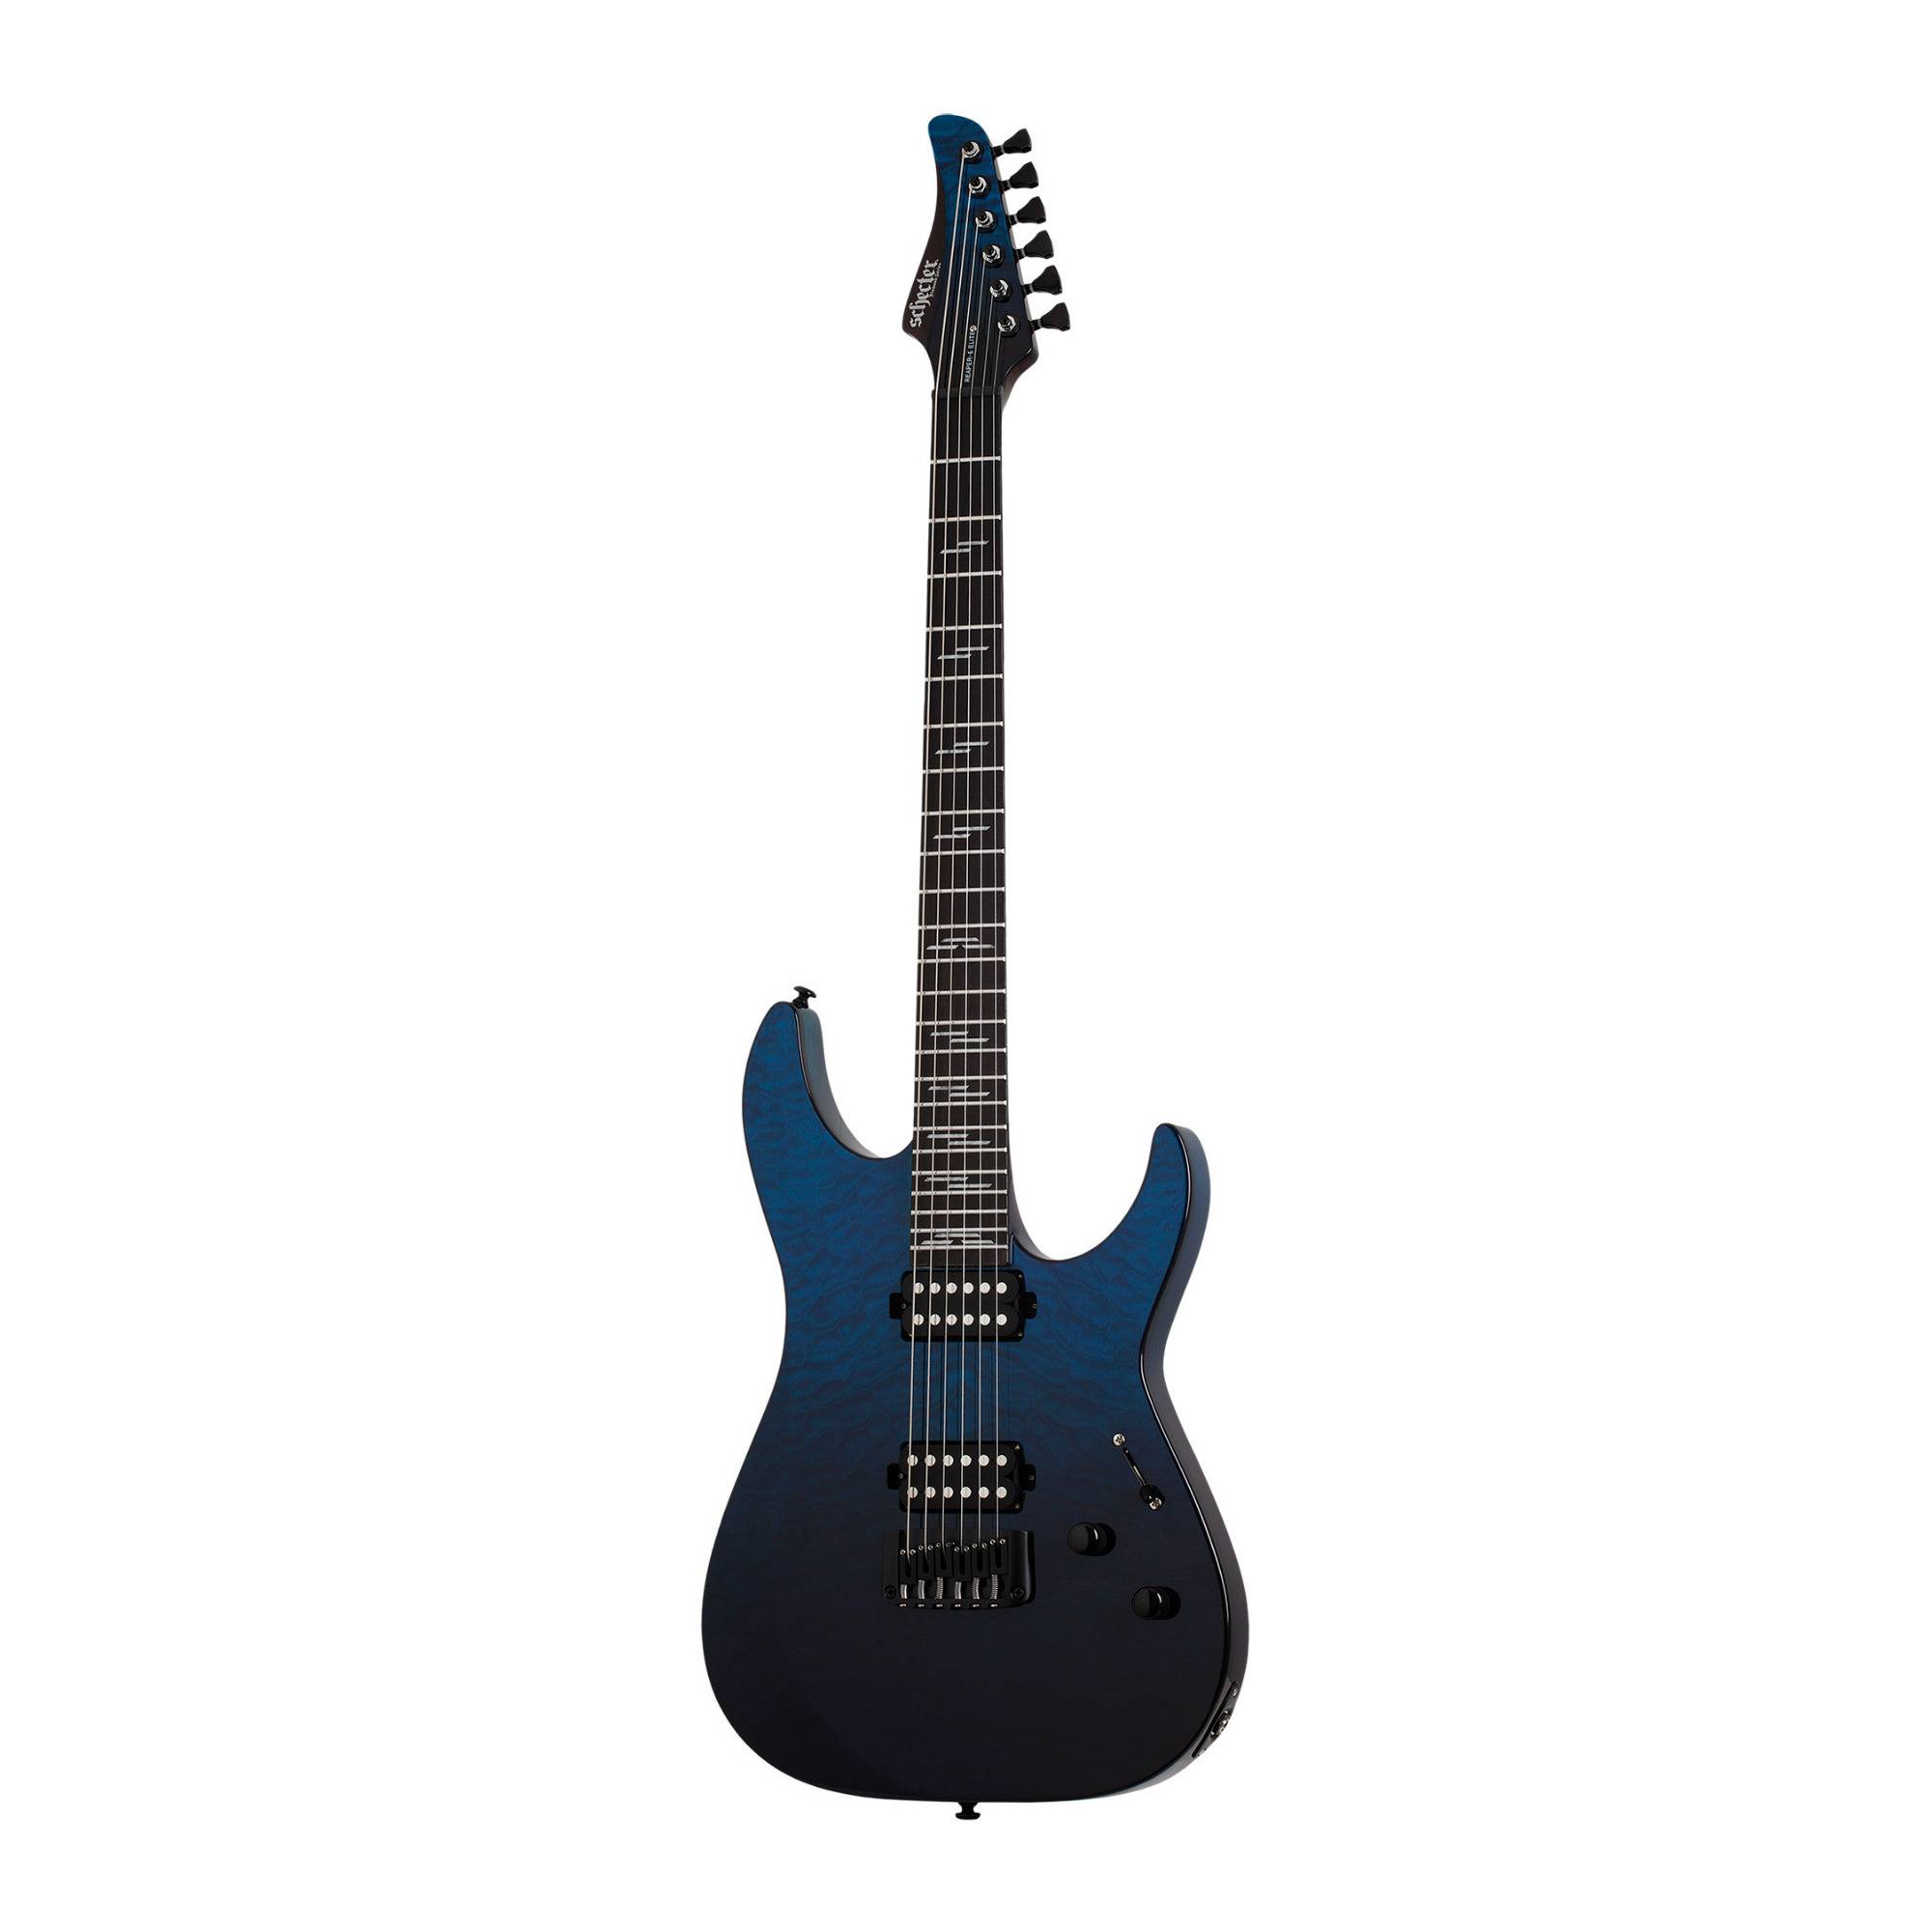 Schecter Reaper-6 Elite 6-String Electric Guitar with Ebony Fretboard (Deep Ocean Blue)